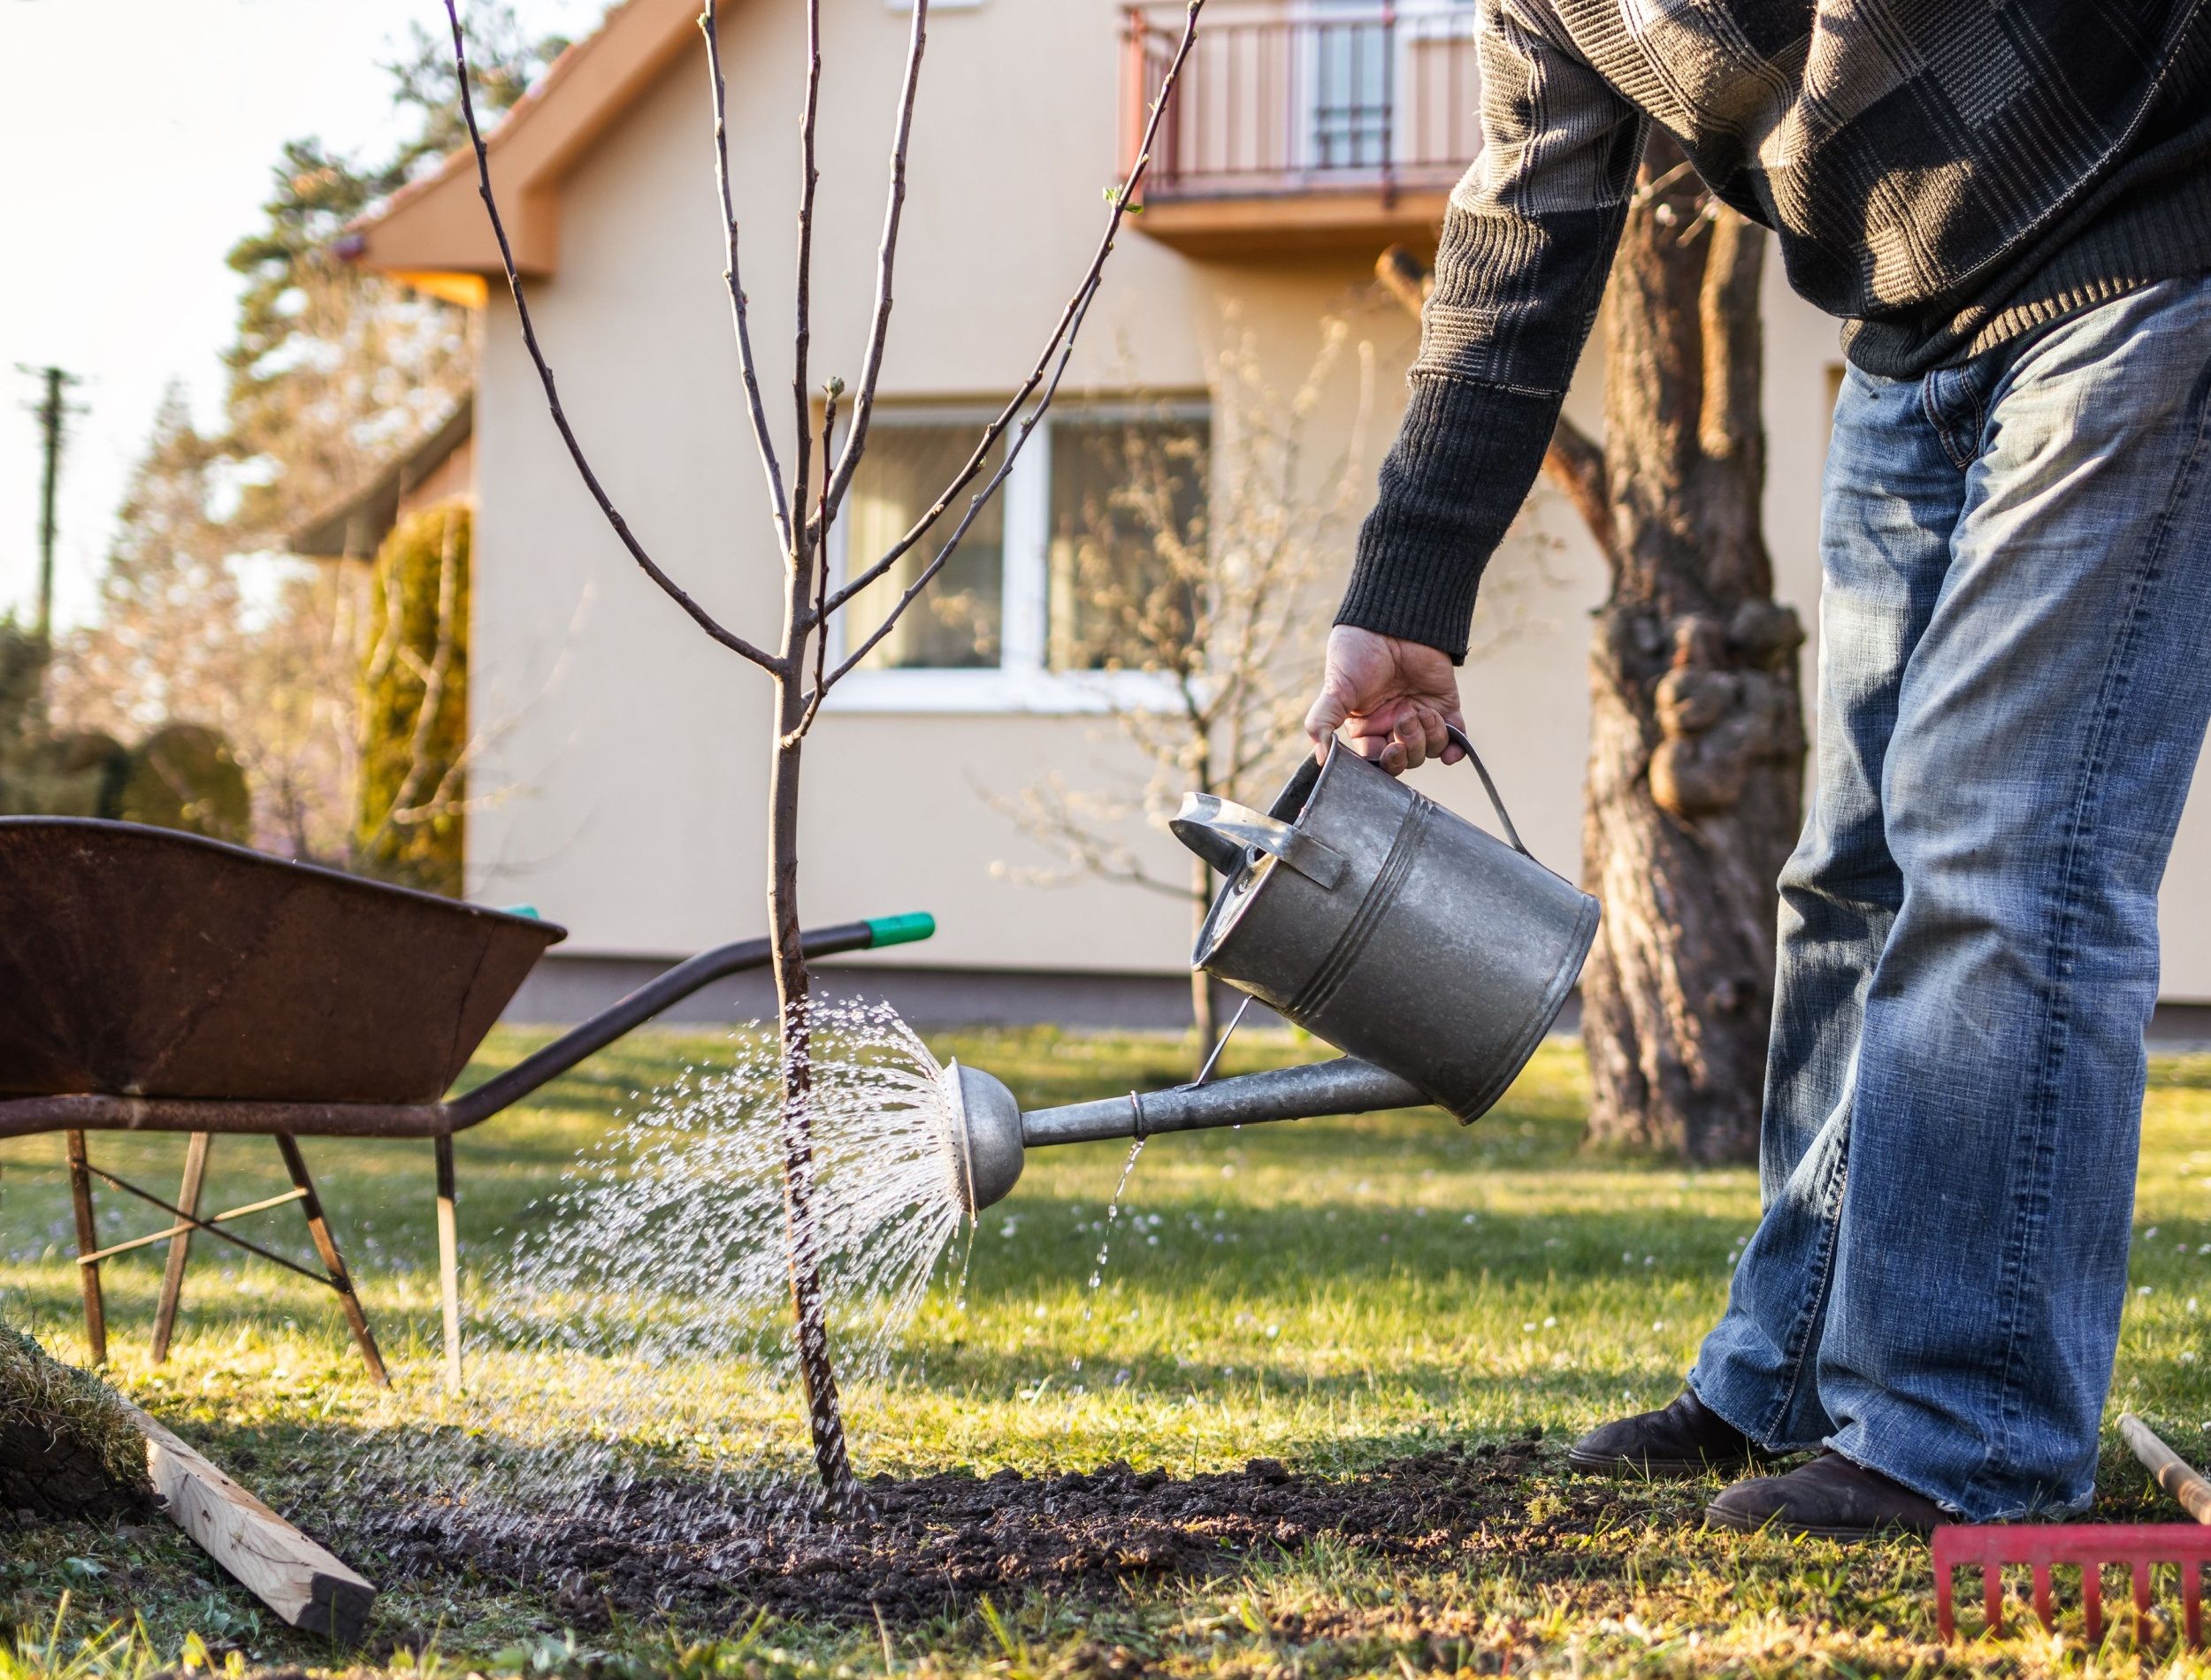 Watering freshly planted fruit tree in garden. Senior man gardening at his backyard during springtime. Using watering can after planting tree